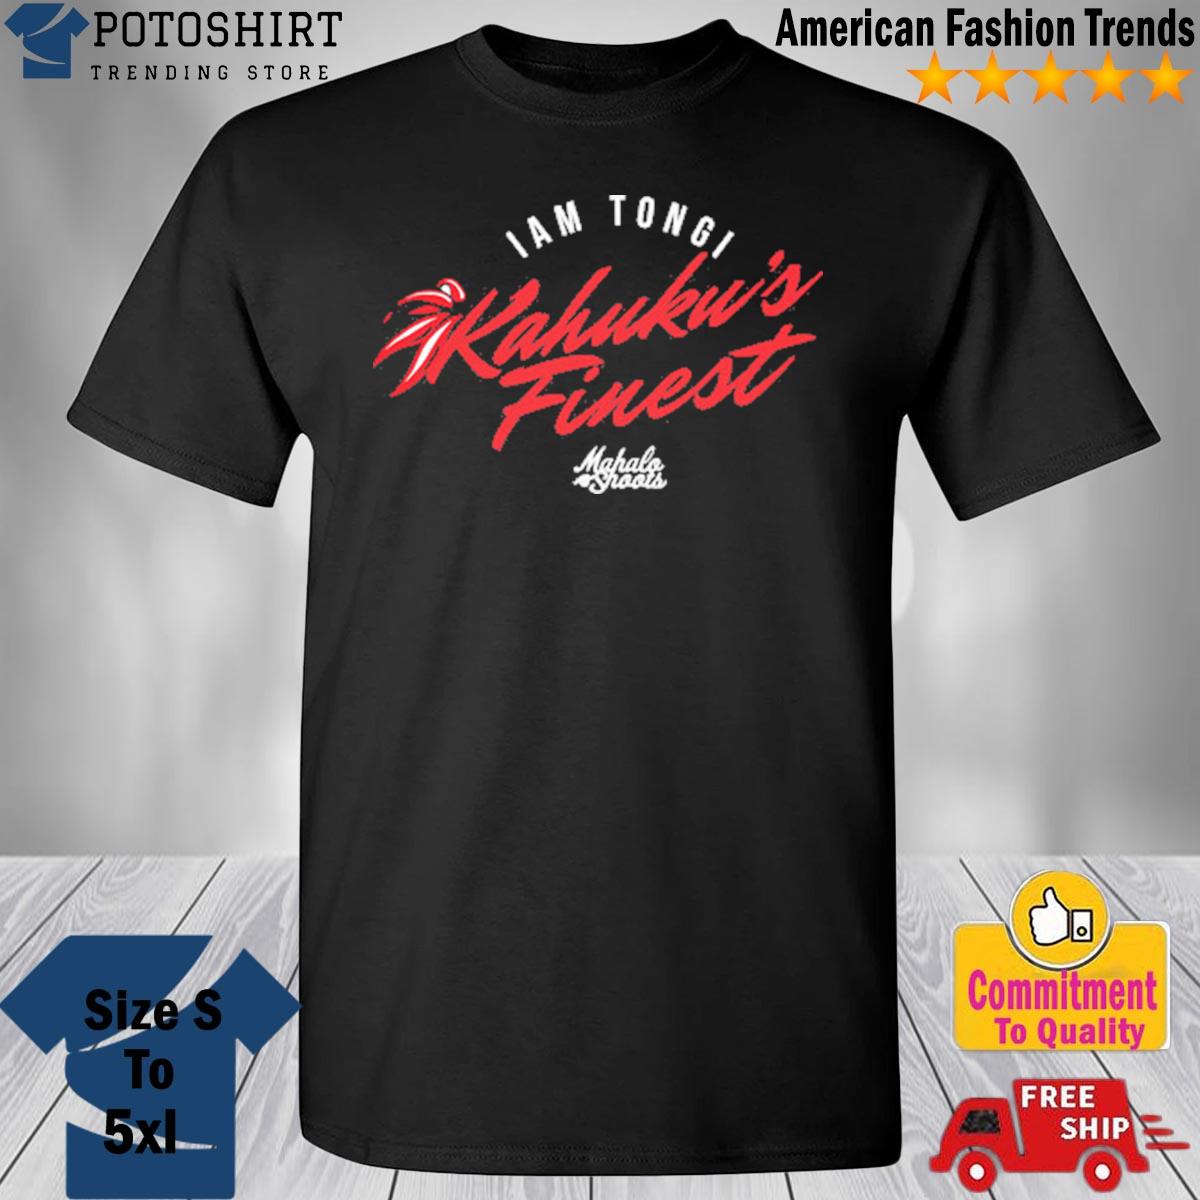 Kahuku’s Finest Shirt iam tongi kahuku t-shirt